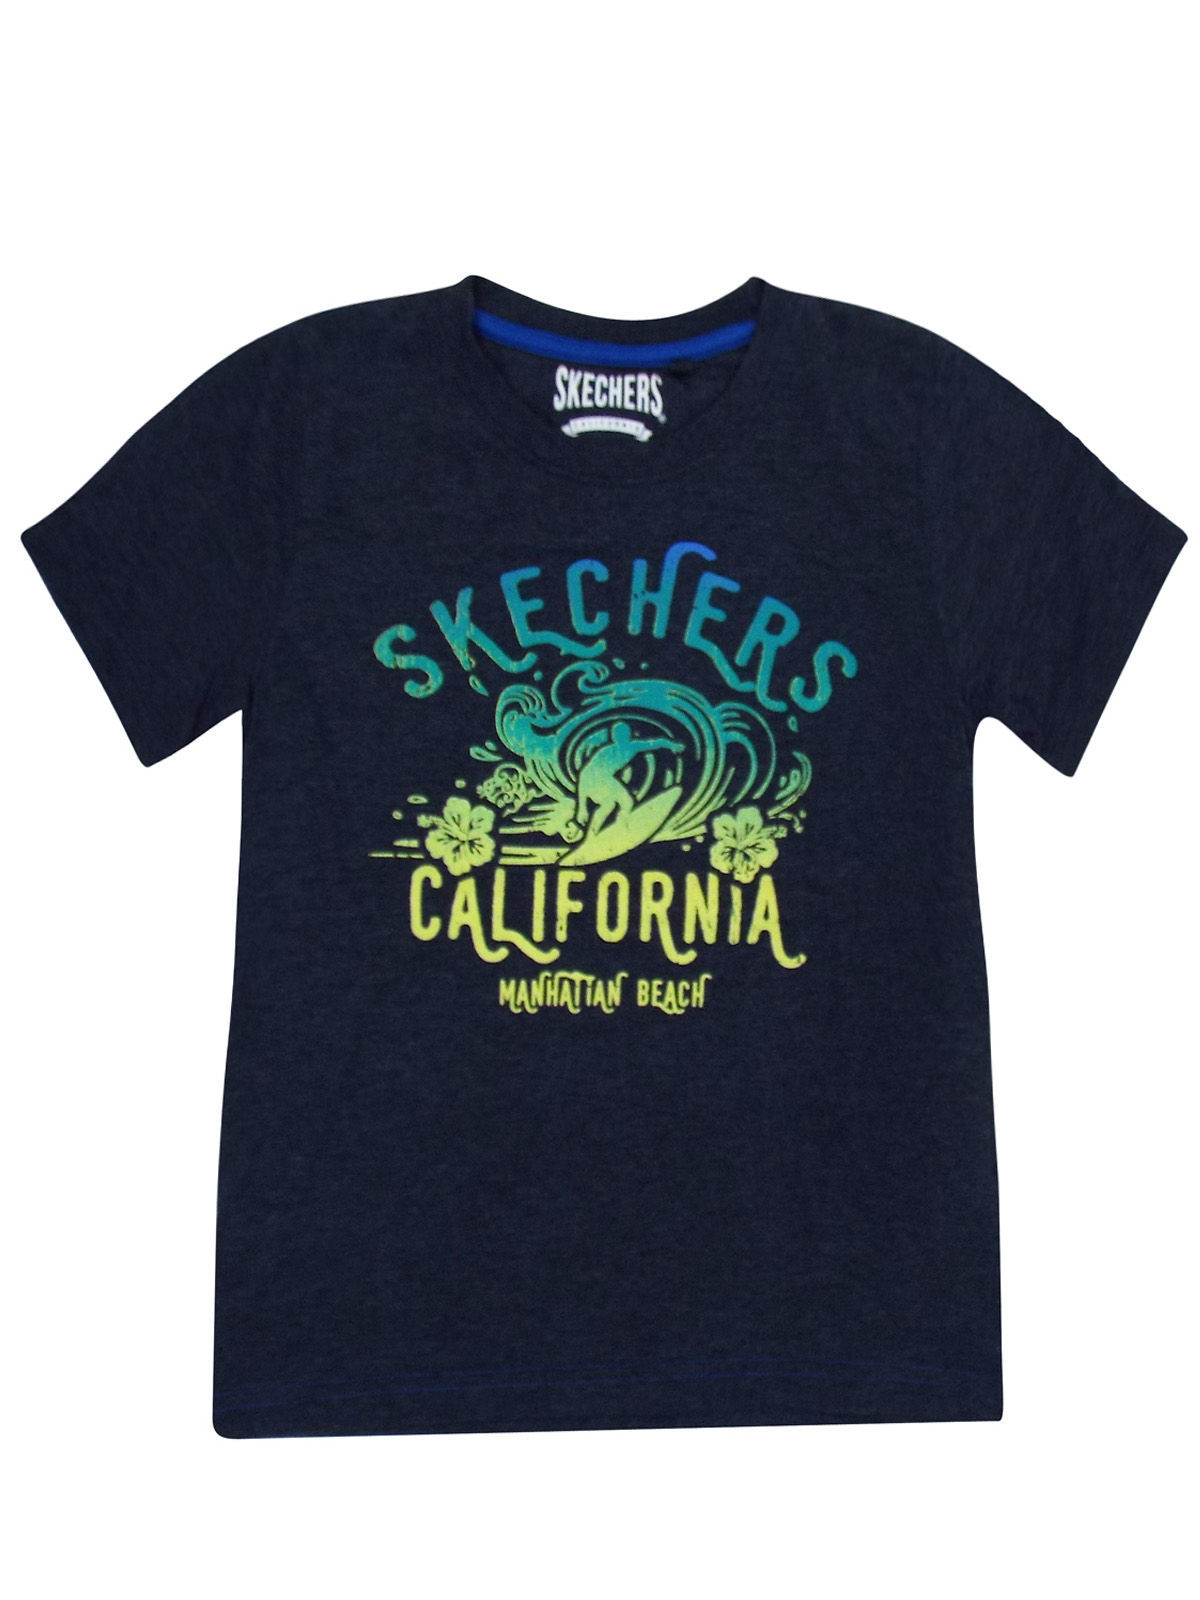 Skechers - - Skechers ASSORTED Boys Printed Short Sleeve -Shirts - Age ...